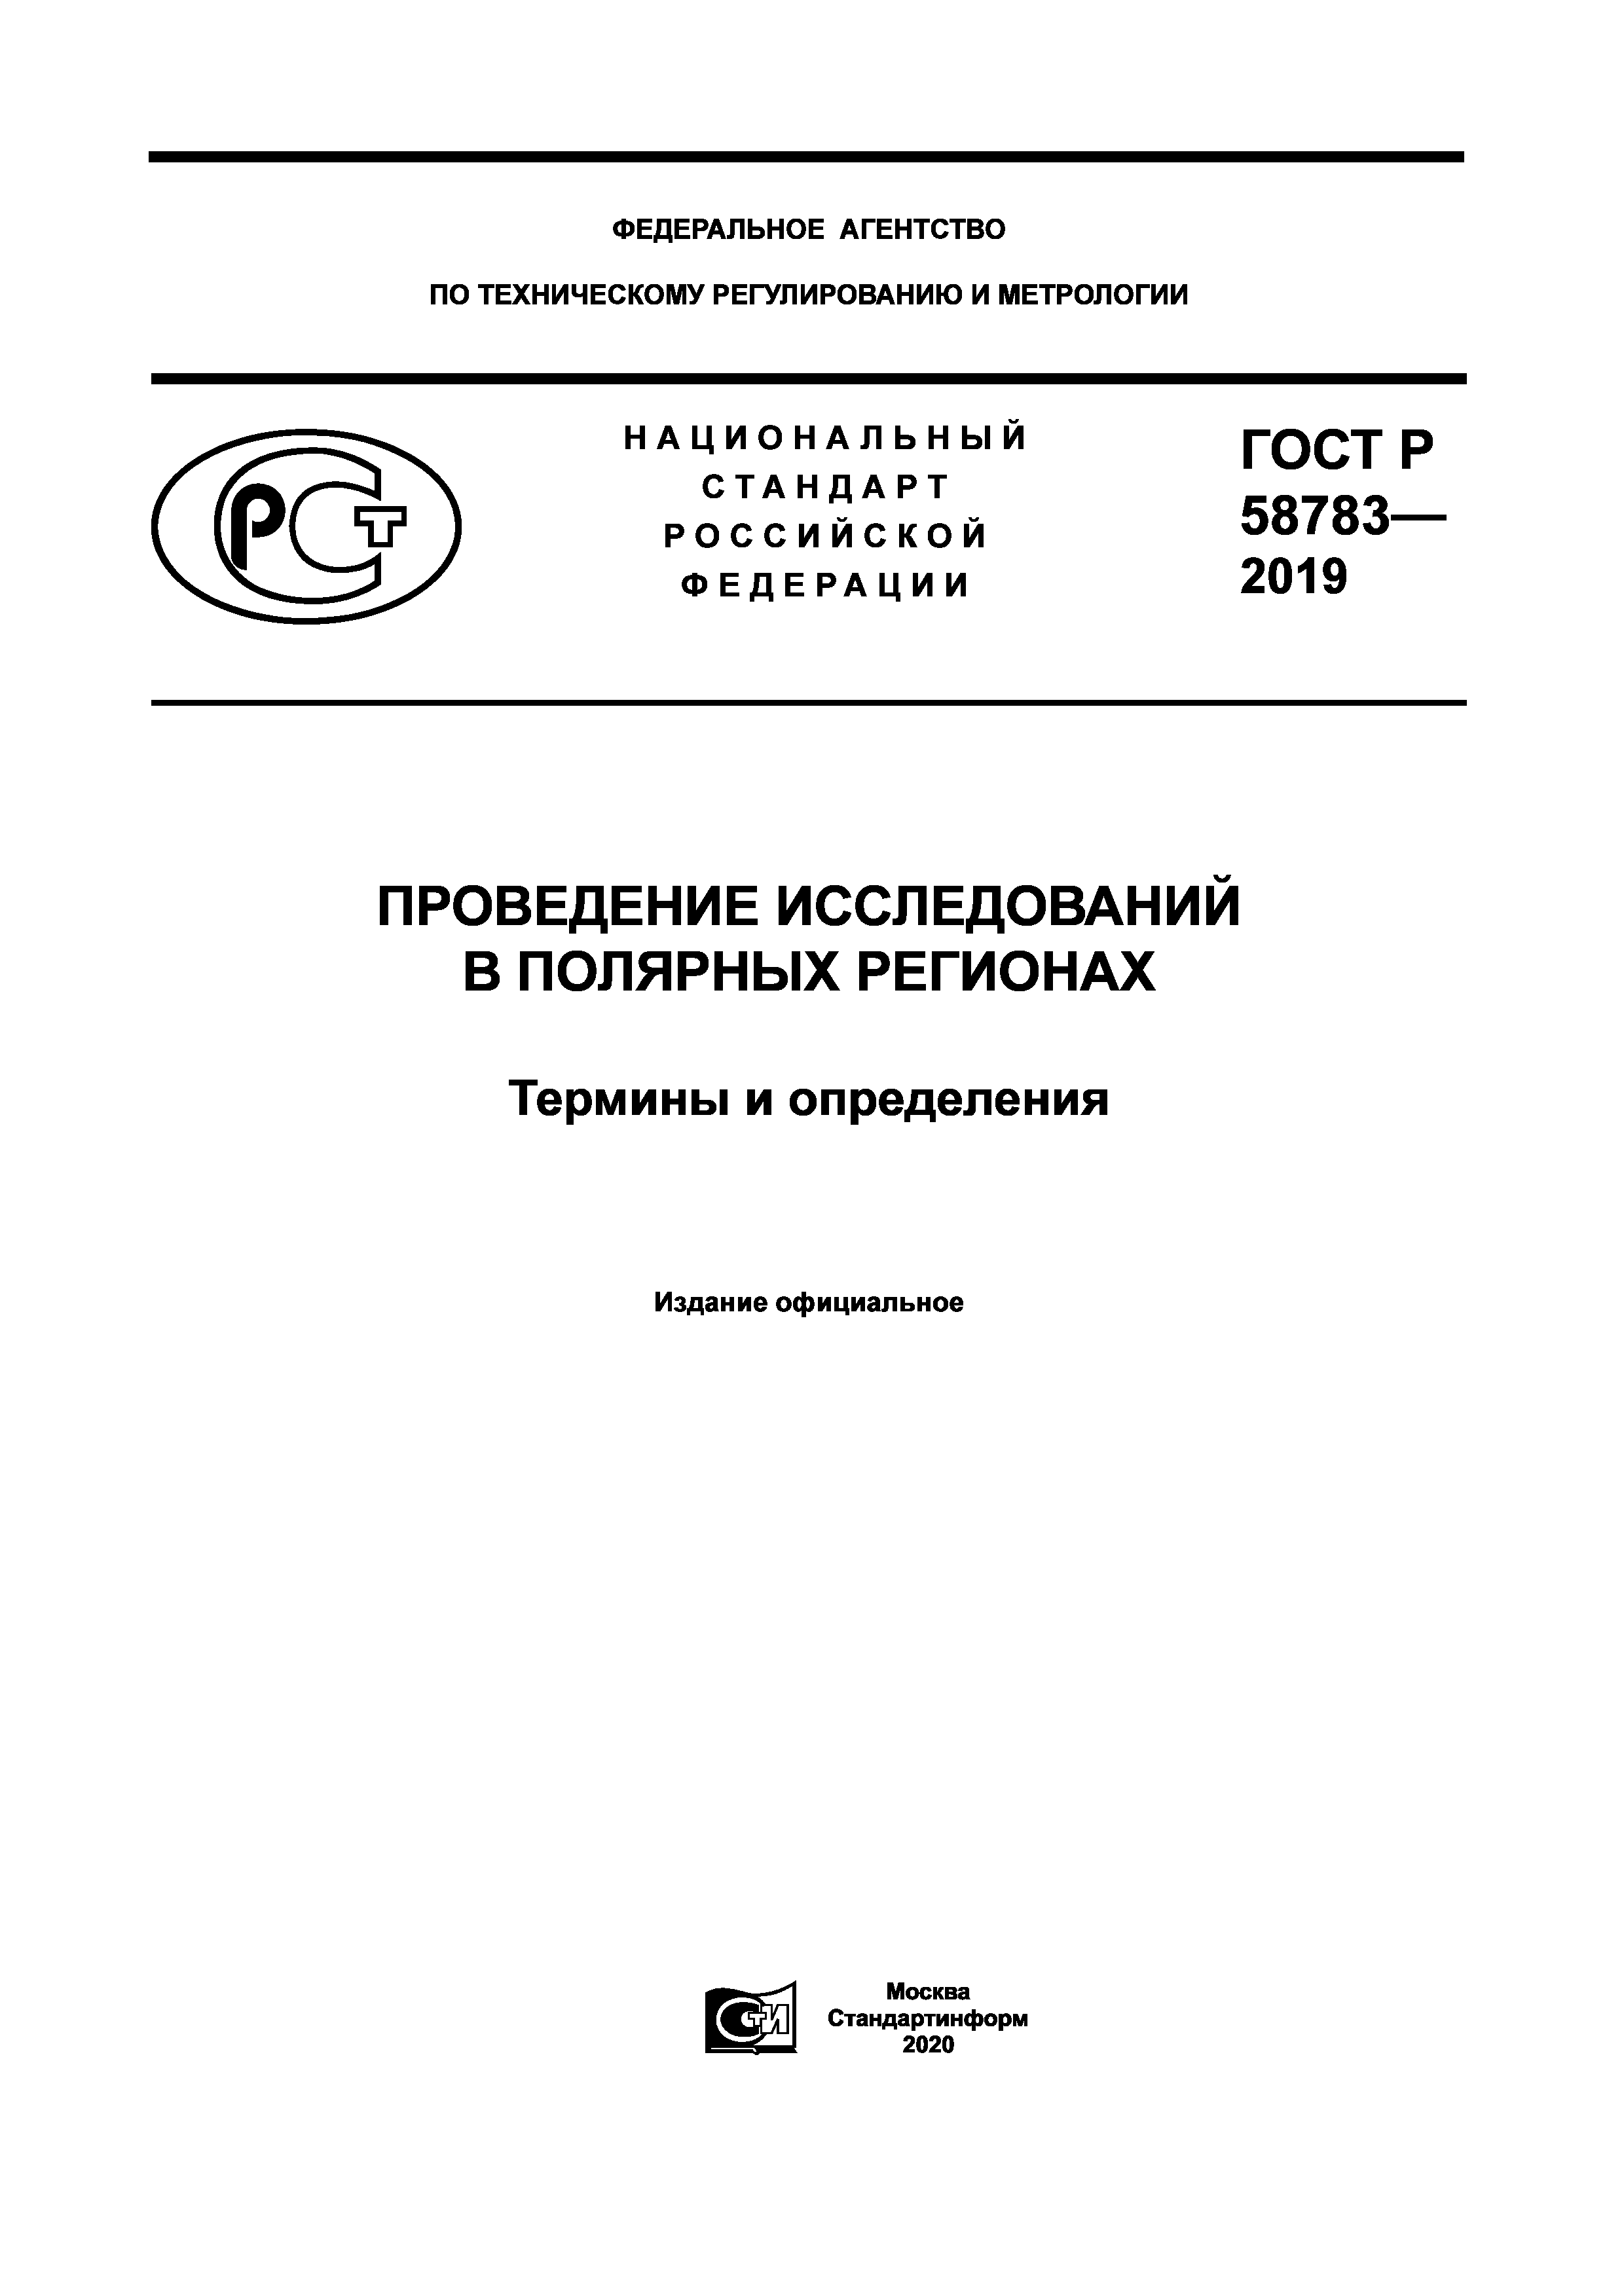 ГОСТ Р 58783-2019